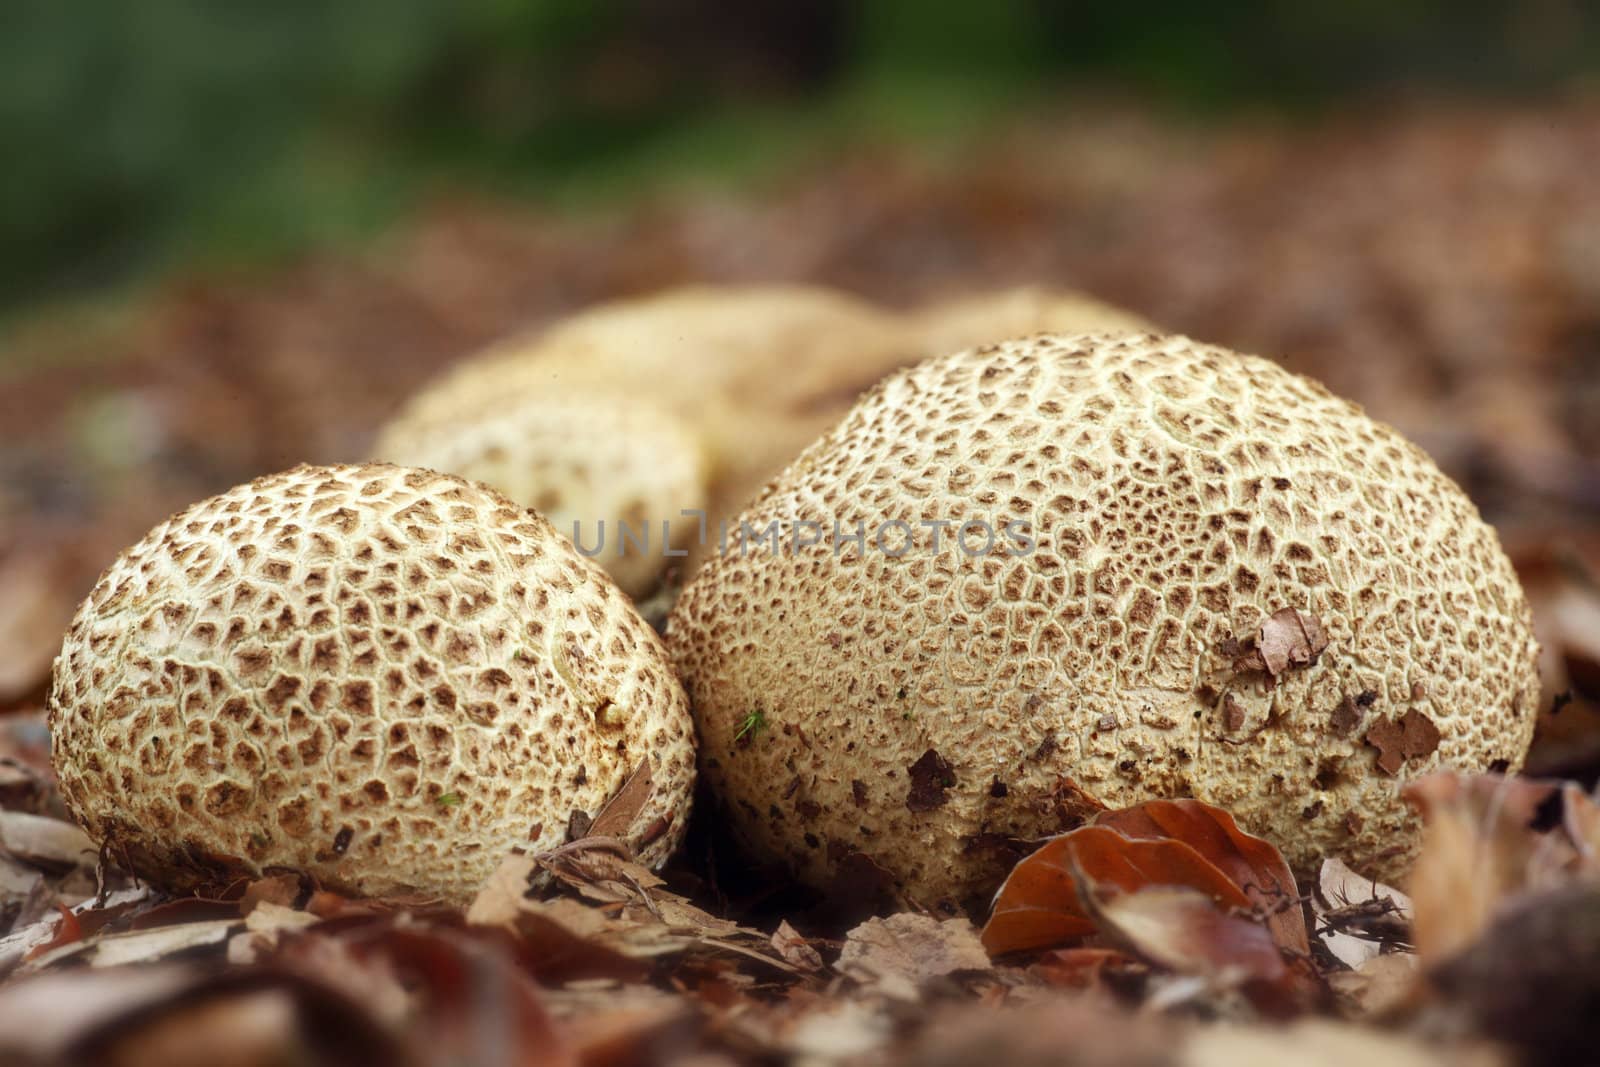 common earthballs on forest floor between beech leaves